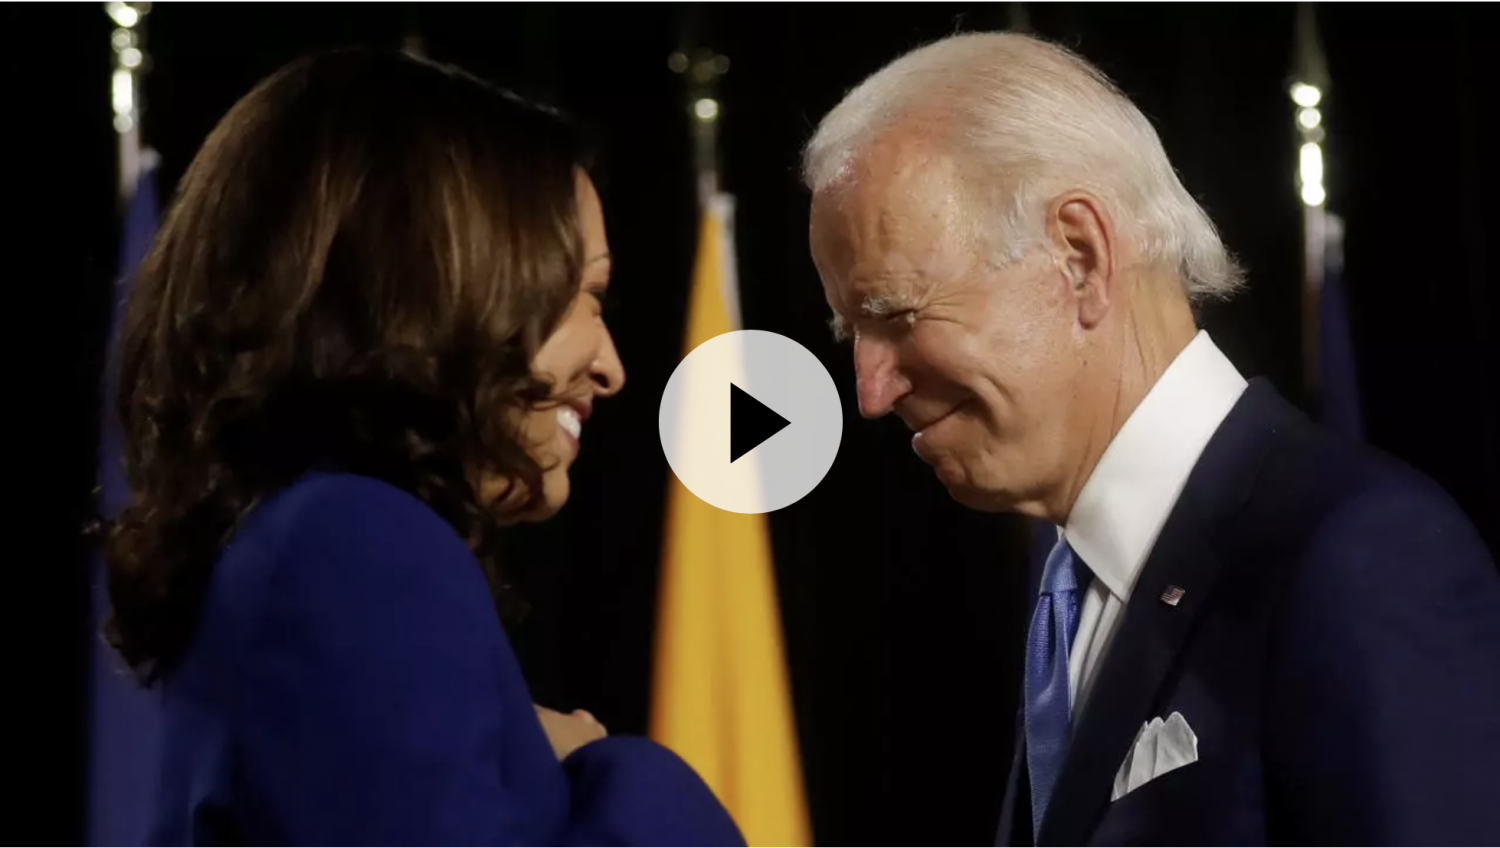 Biden, Harris launch campaign with promise to 'rebuild' broken America